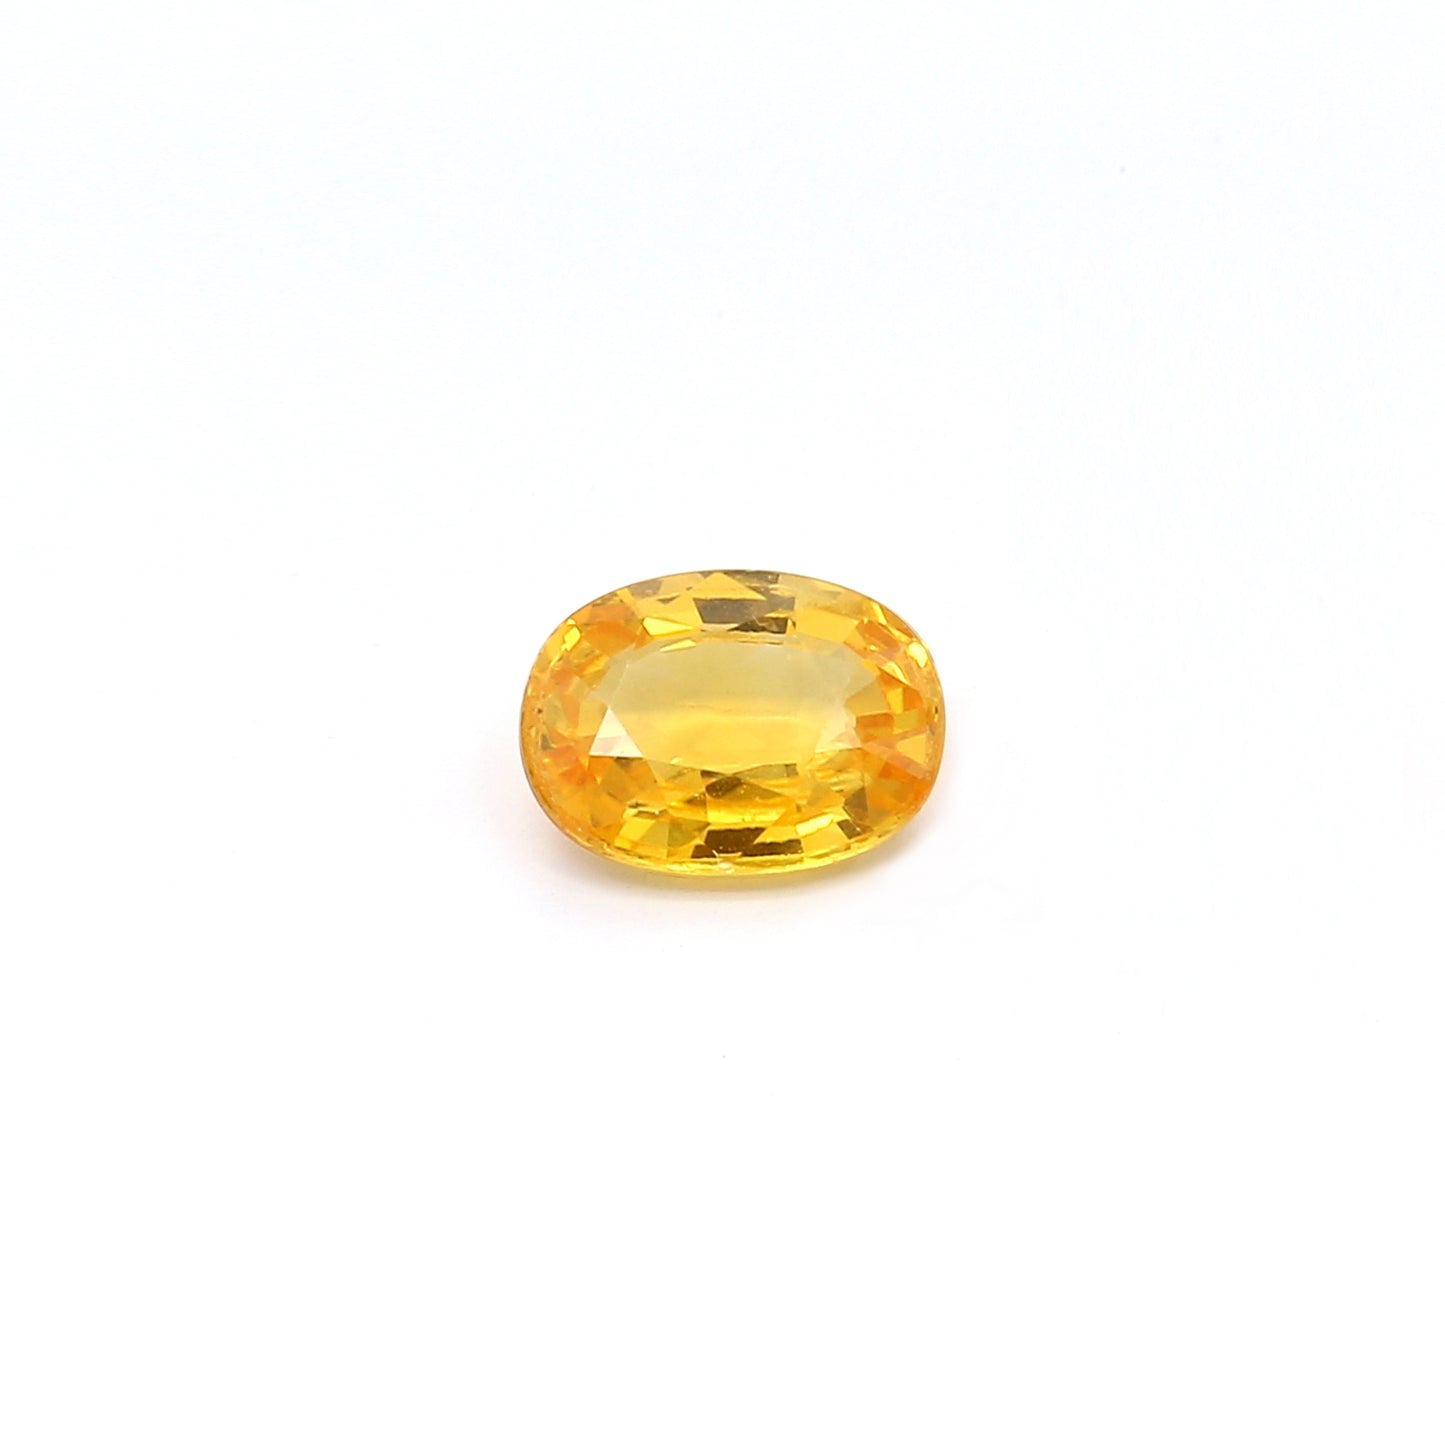 1.17ct Yellow, Oval Sapphire, Heated, Sri Lanka - 7.26 x 5.49 x 2.98mm